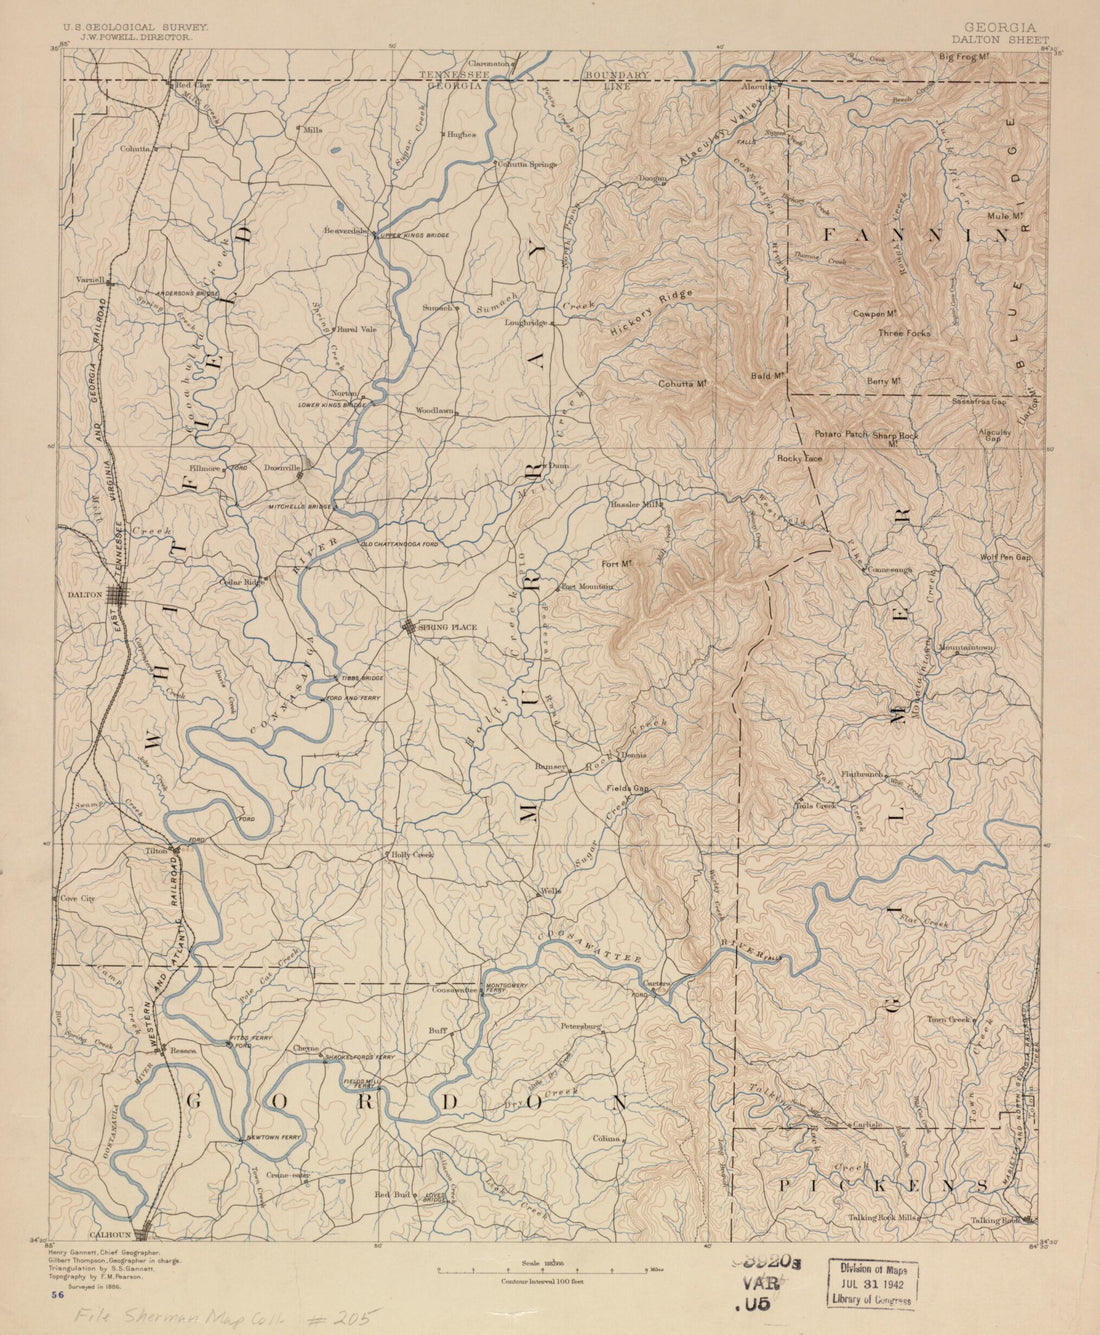 This old map of Georgia, Dalton Sheet from 1886 was created by Henry Gannett, Samuel S. (Samuel Stinson) Gannett,  Geological Survey (U.S.), F. M. Pearson, Gilbert Thompson in 1886